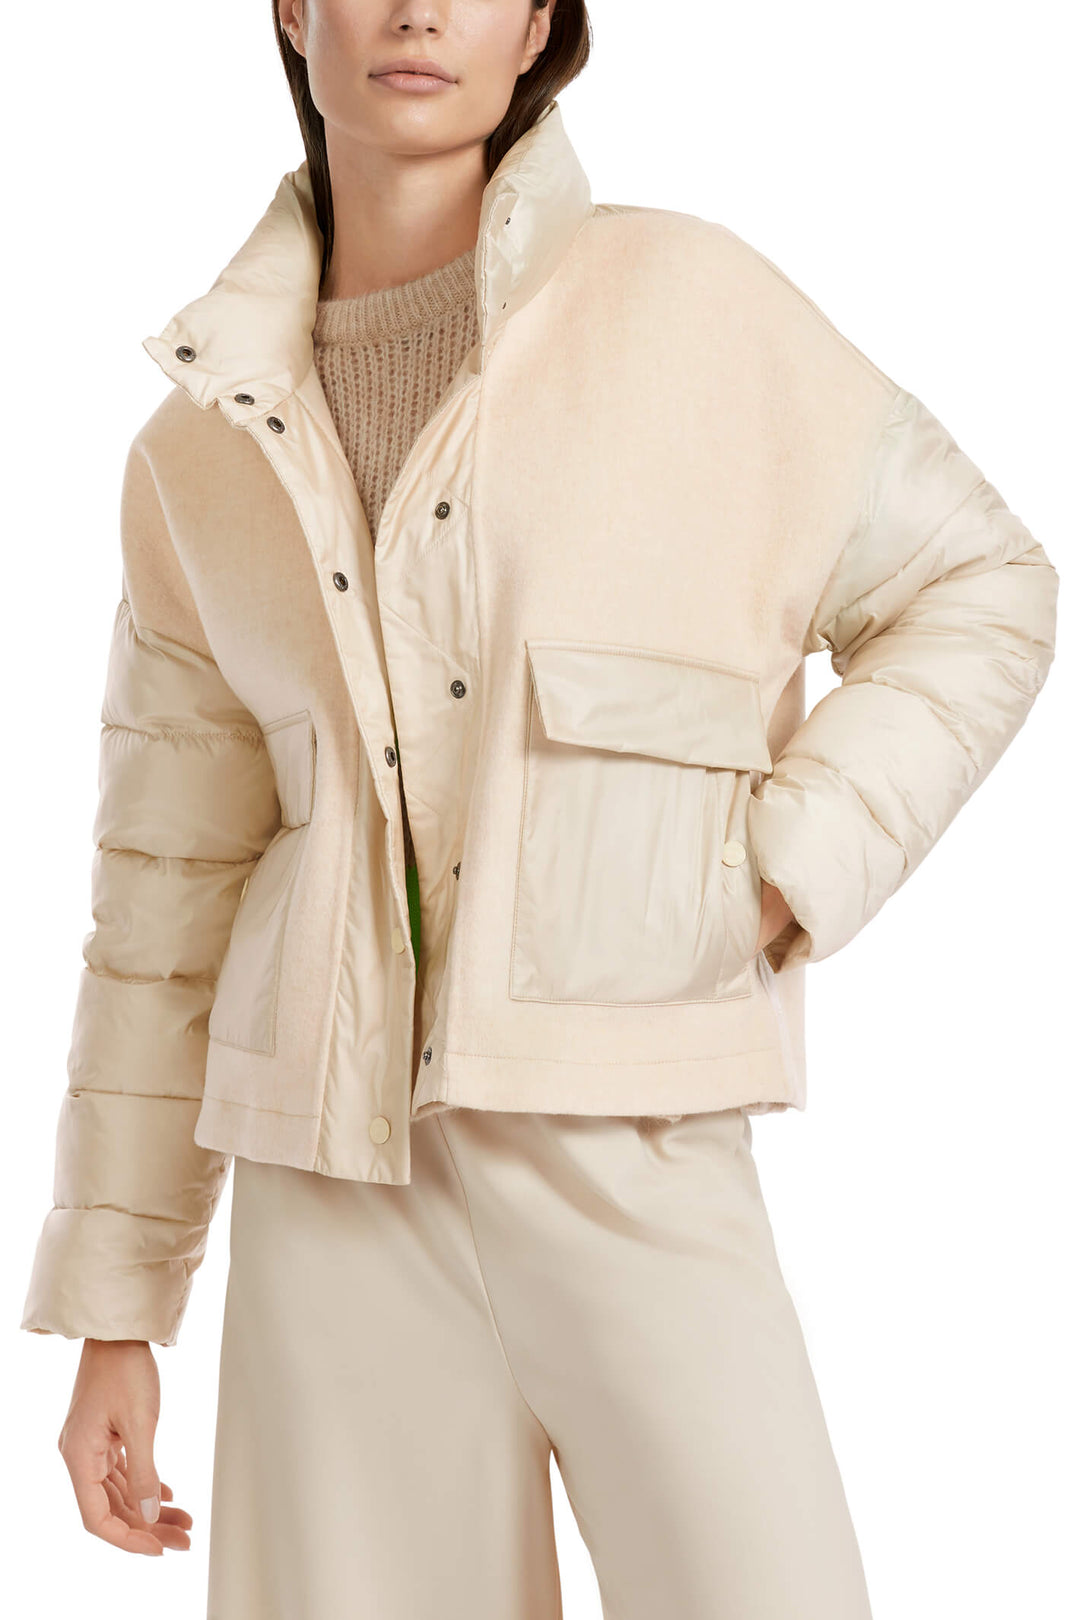 Marc Cain Sports VS 12.03 W31 610 Light Stone Jacket - Olivia Grace Fashion